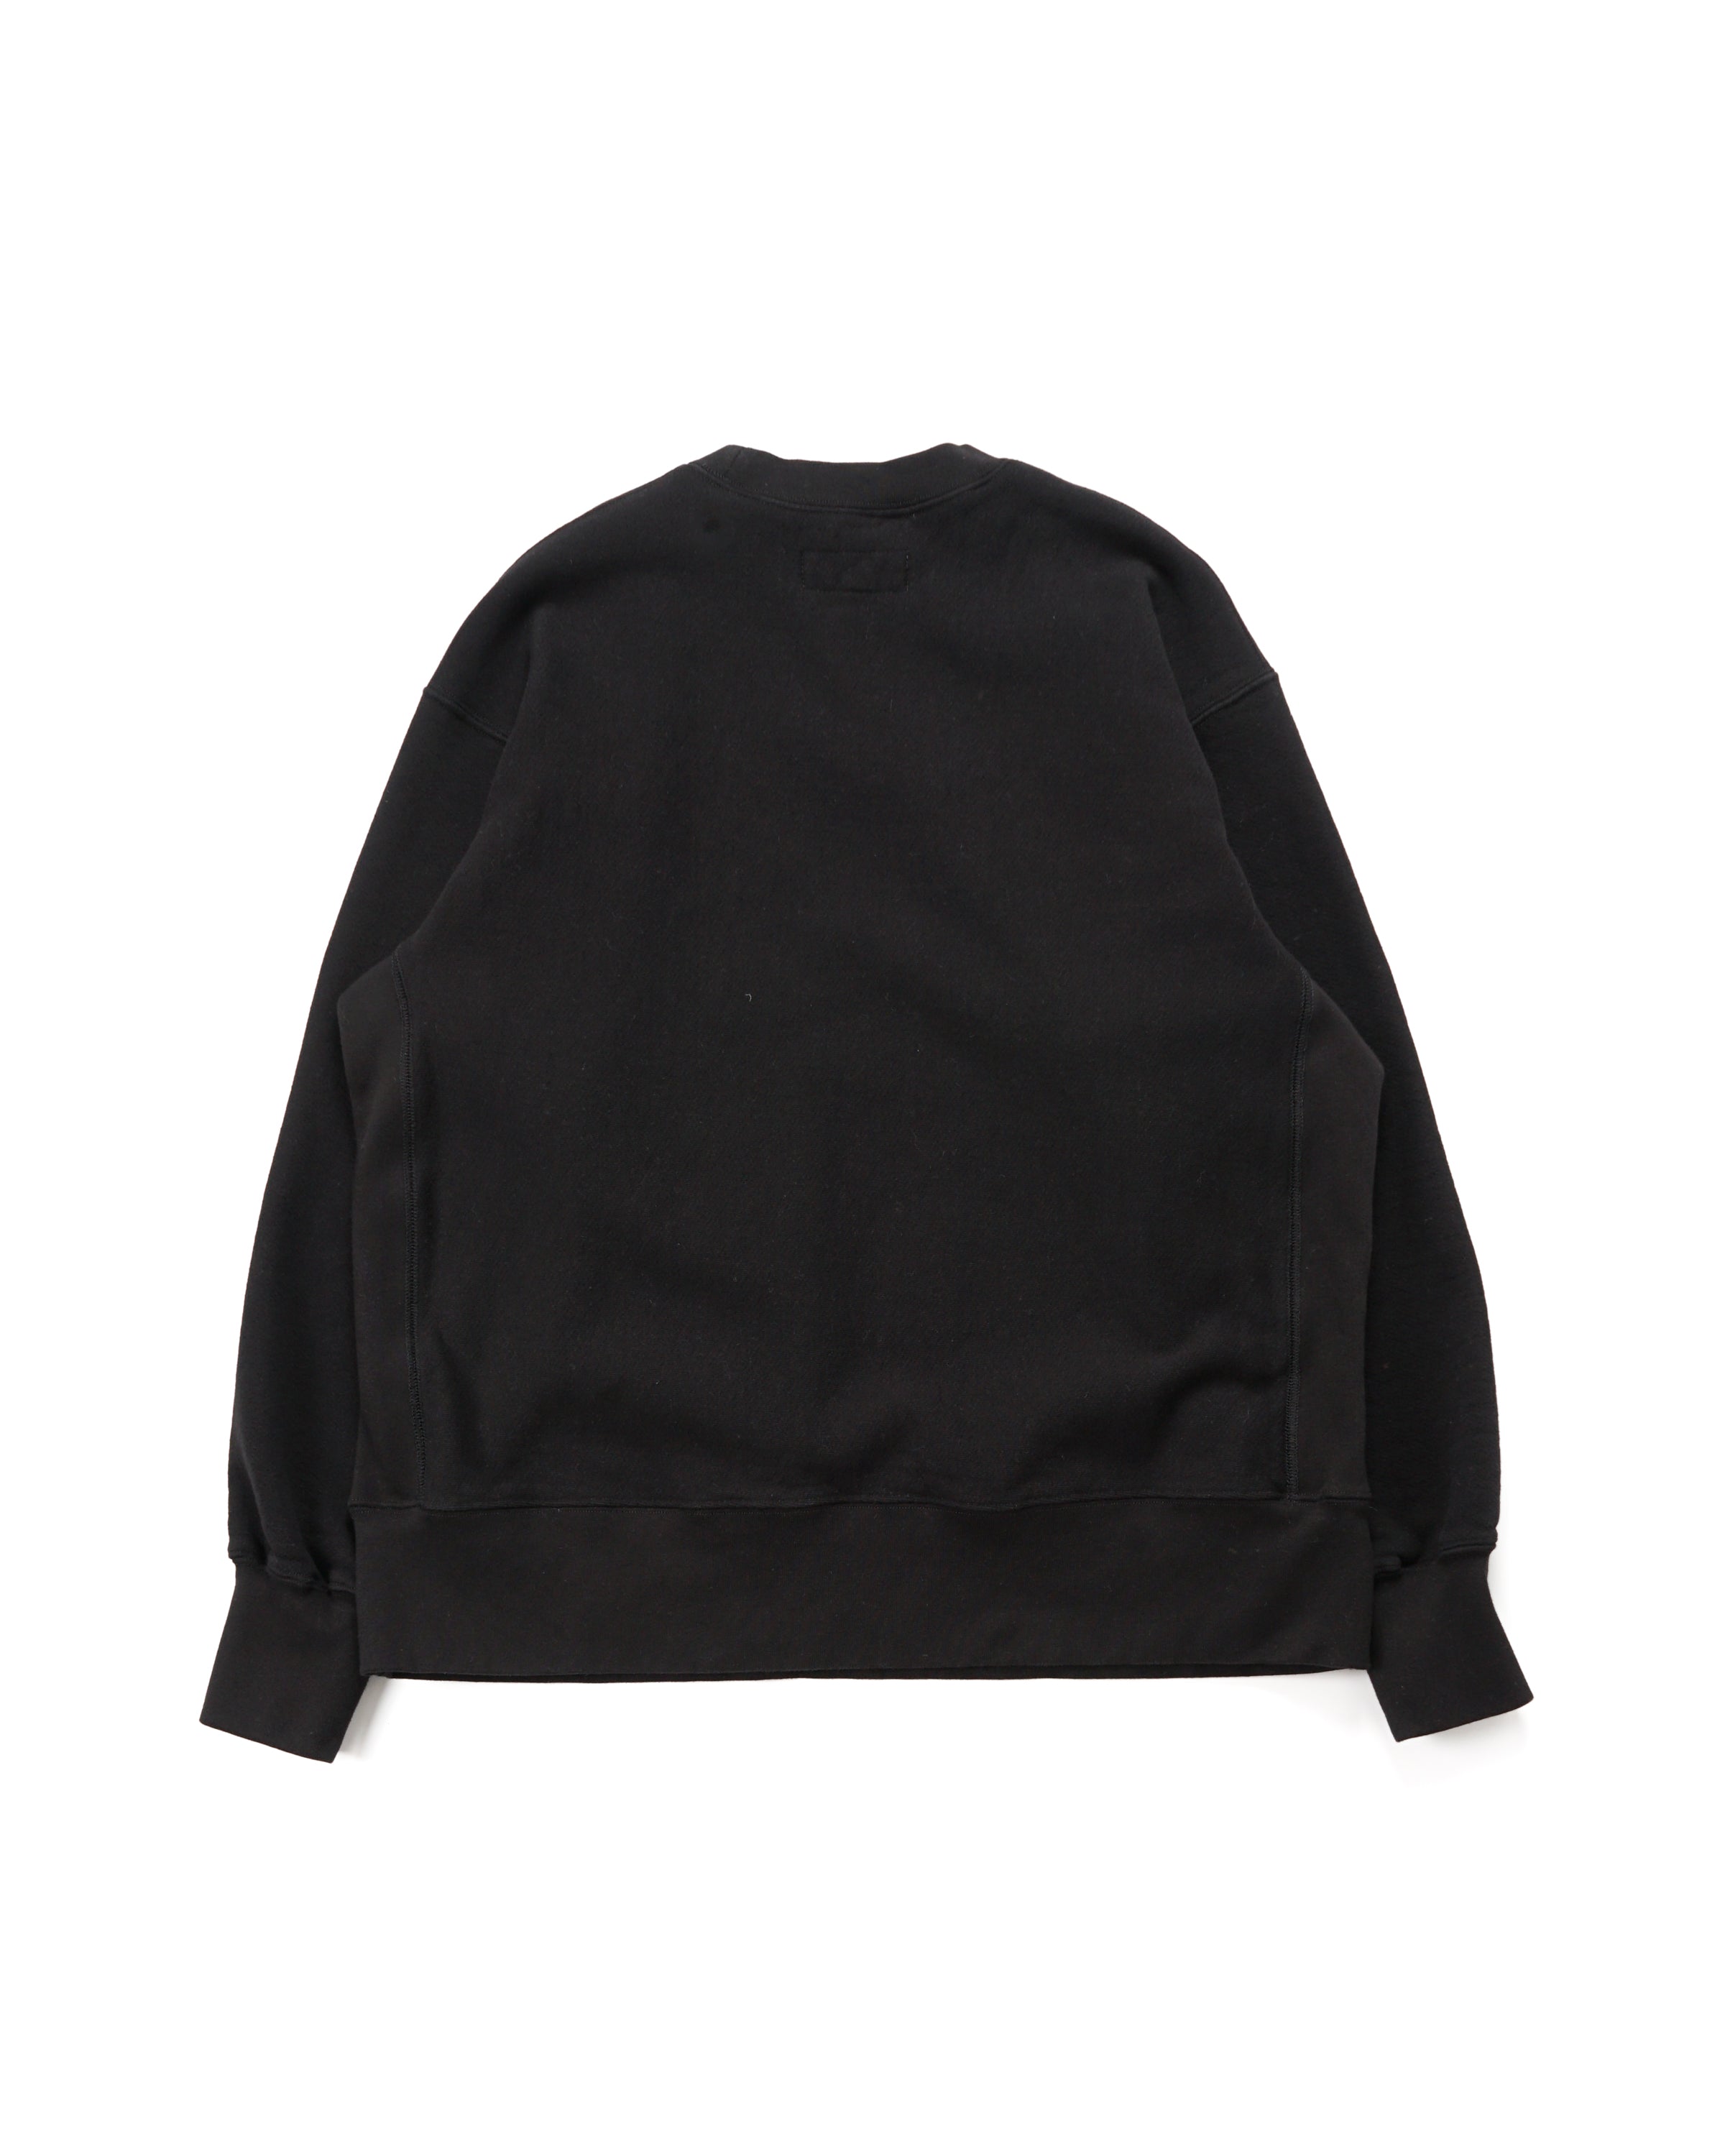 Utility Sweat Shirt - Black 12oz Cotton Fleece